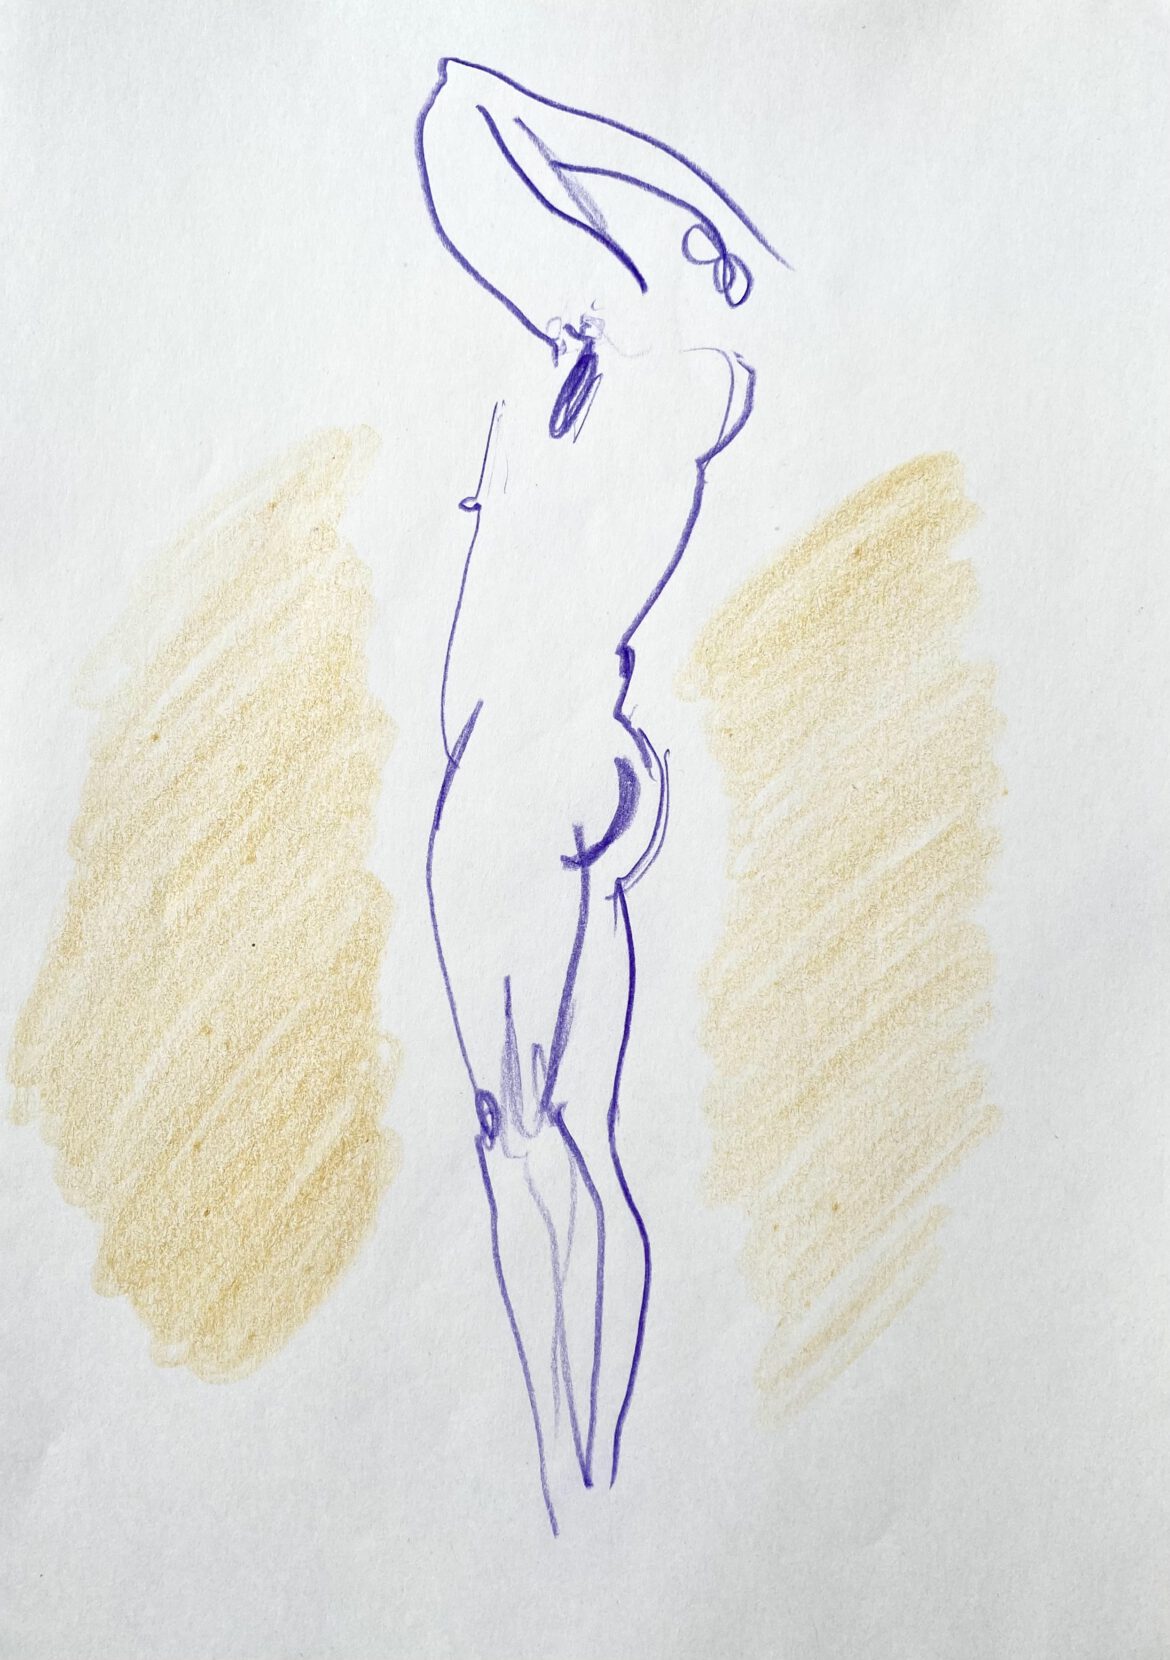 a naked muscular man at the gay nude beach Maspalomas drawing by LGBT artist Paul Astor Berlin